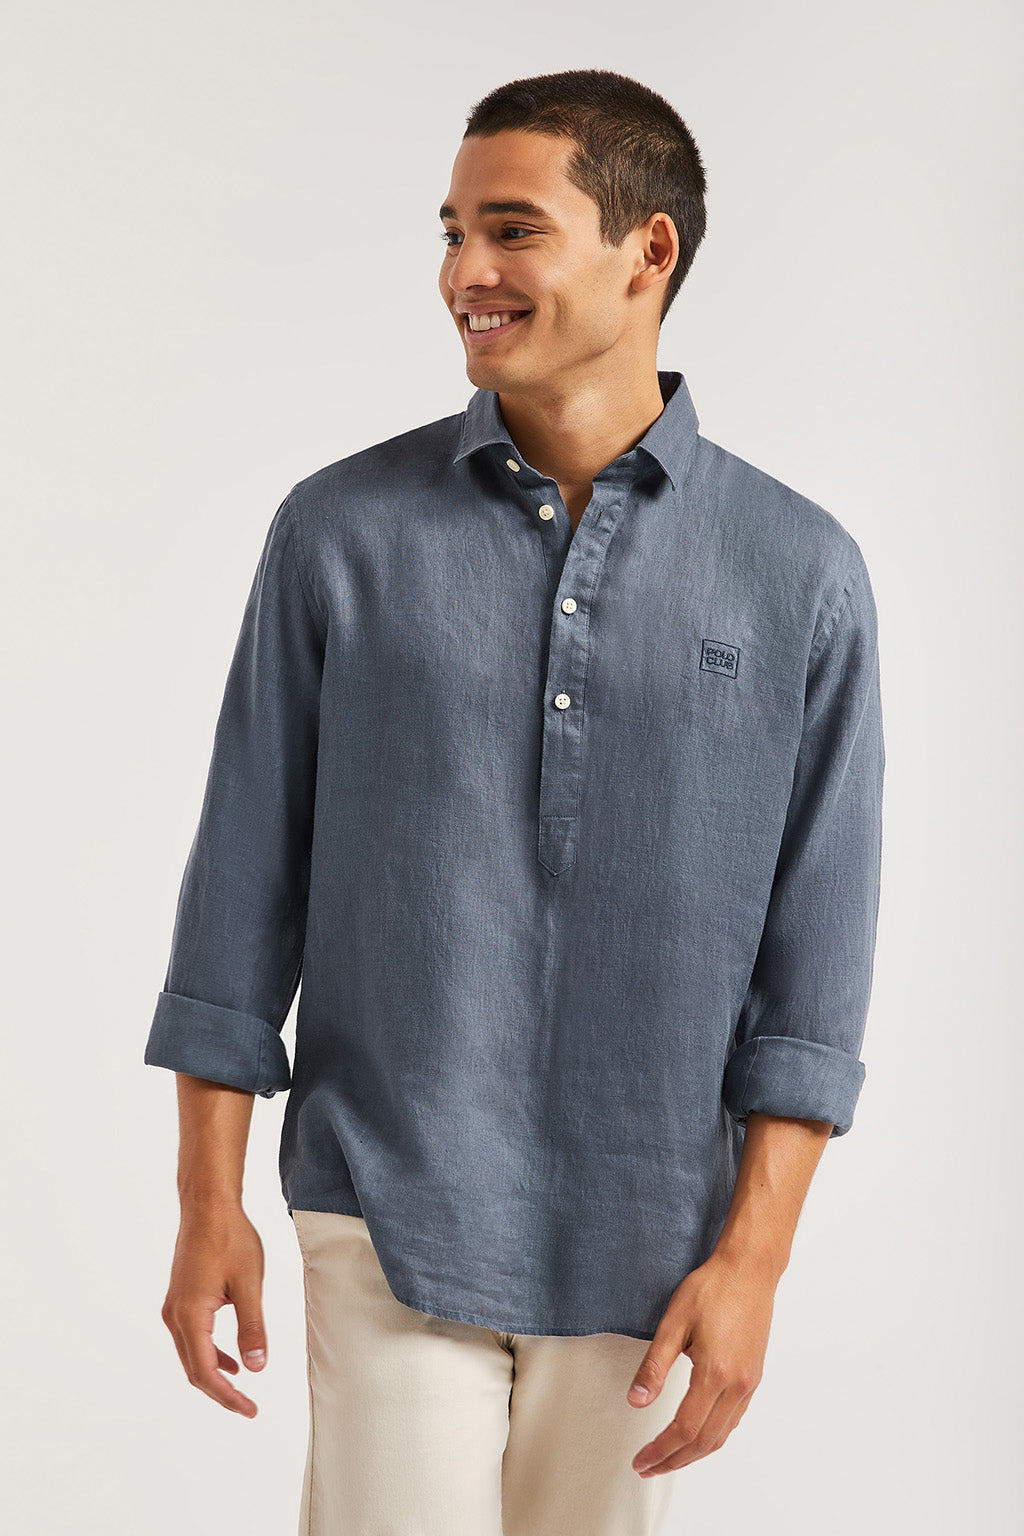 cristiano Consciente Idealmente Camisa polera azul denim custom fit con logo bordado – Polo Club